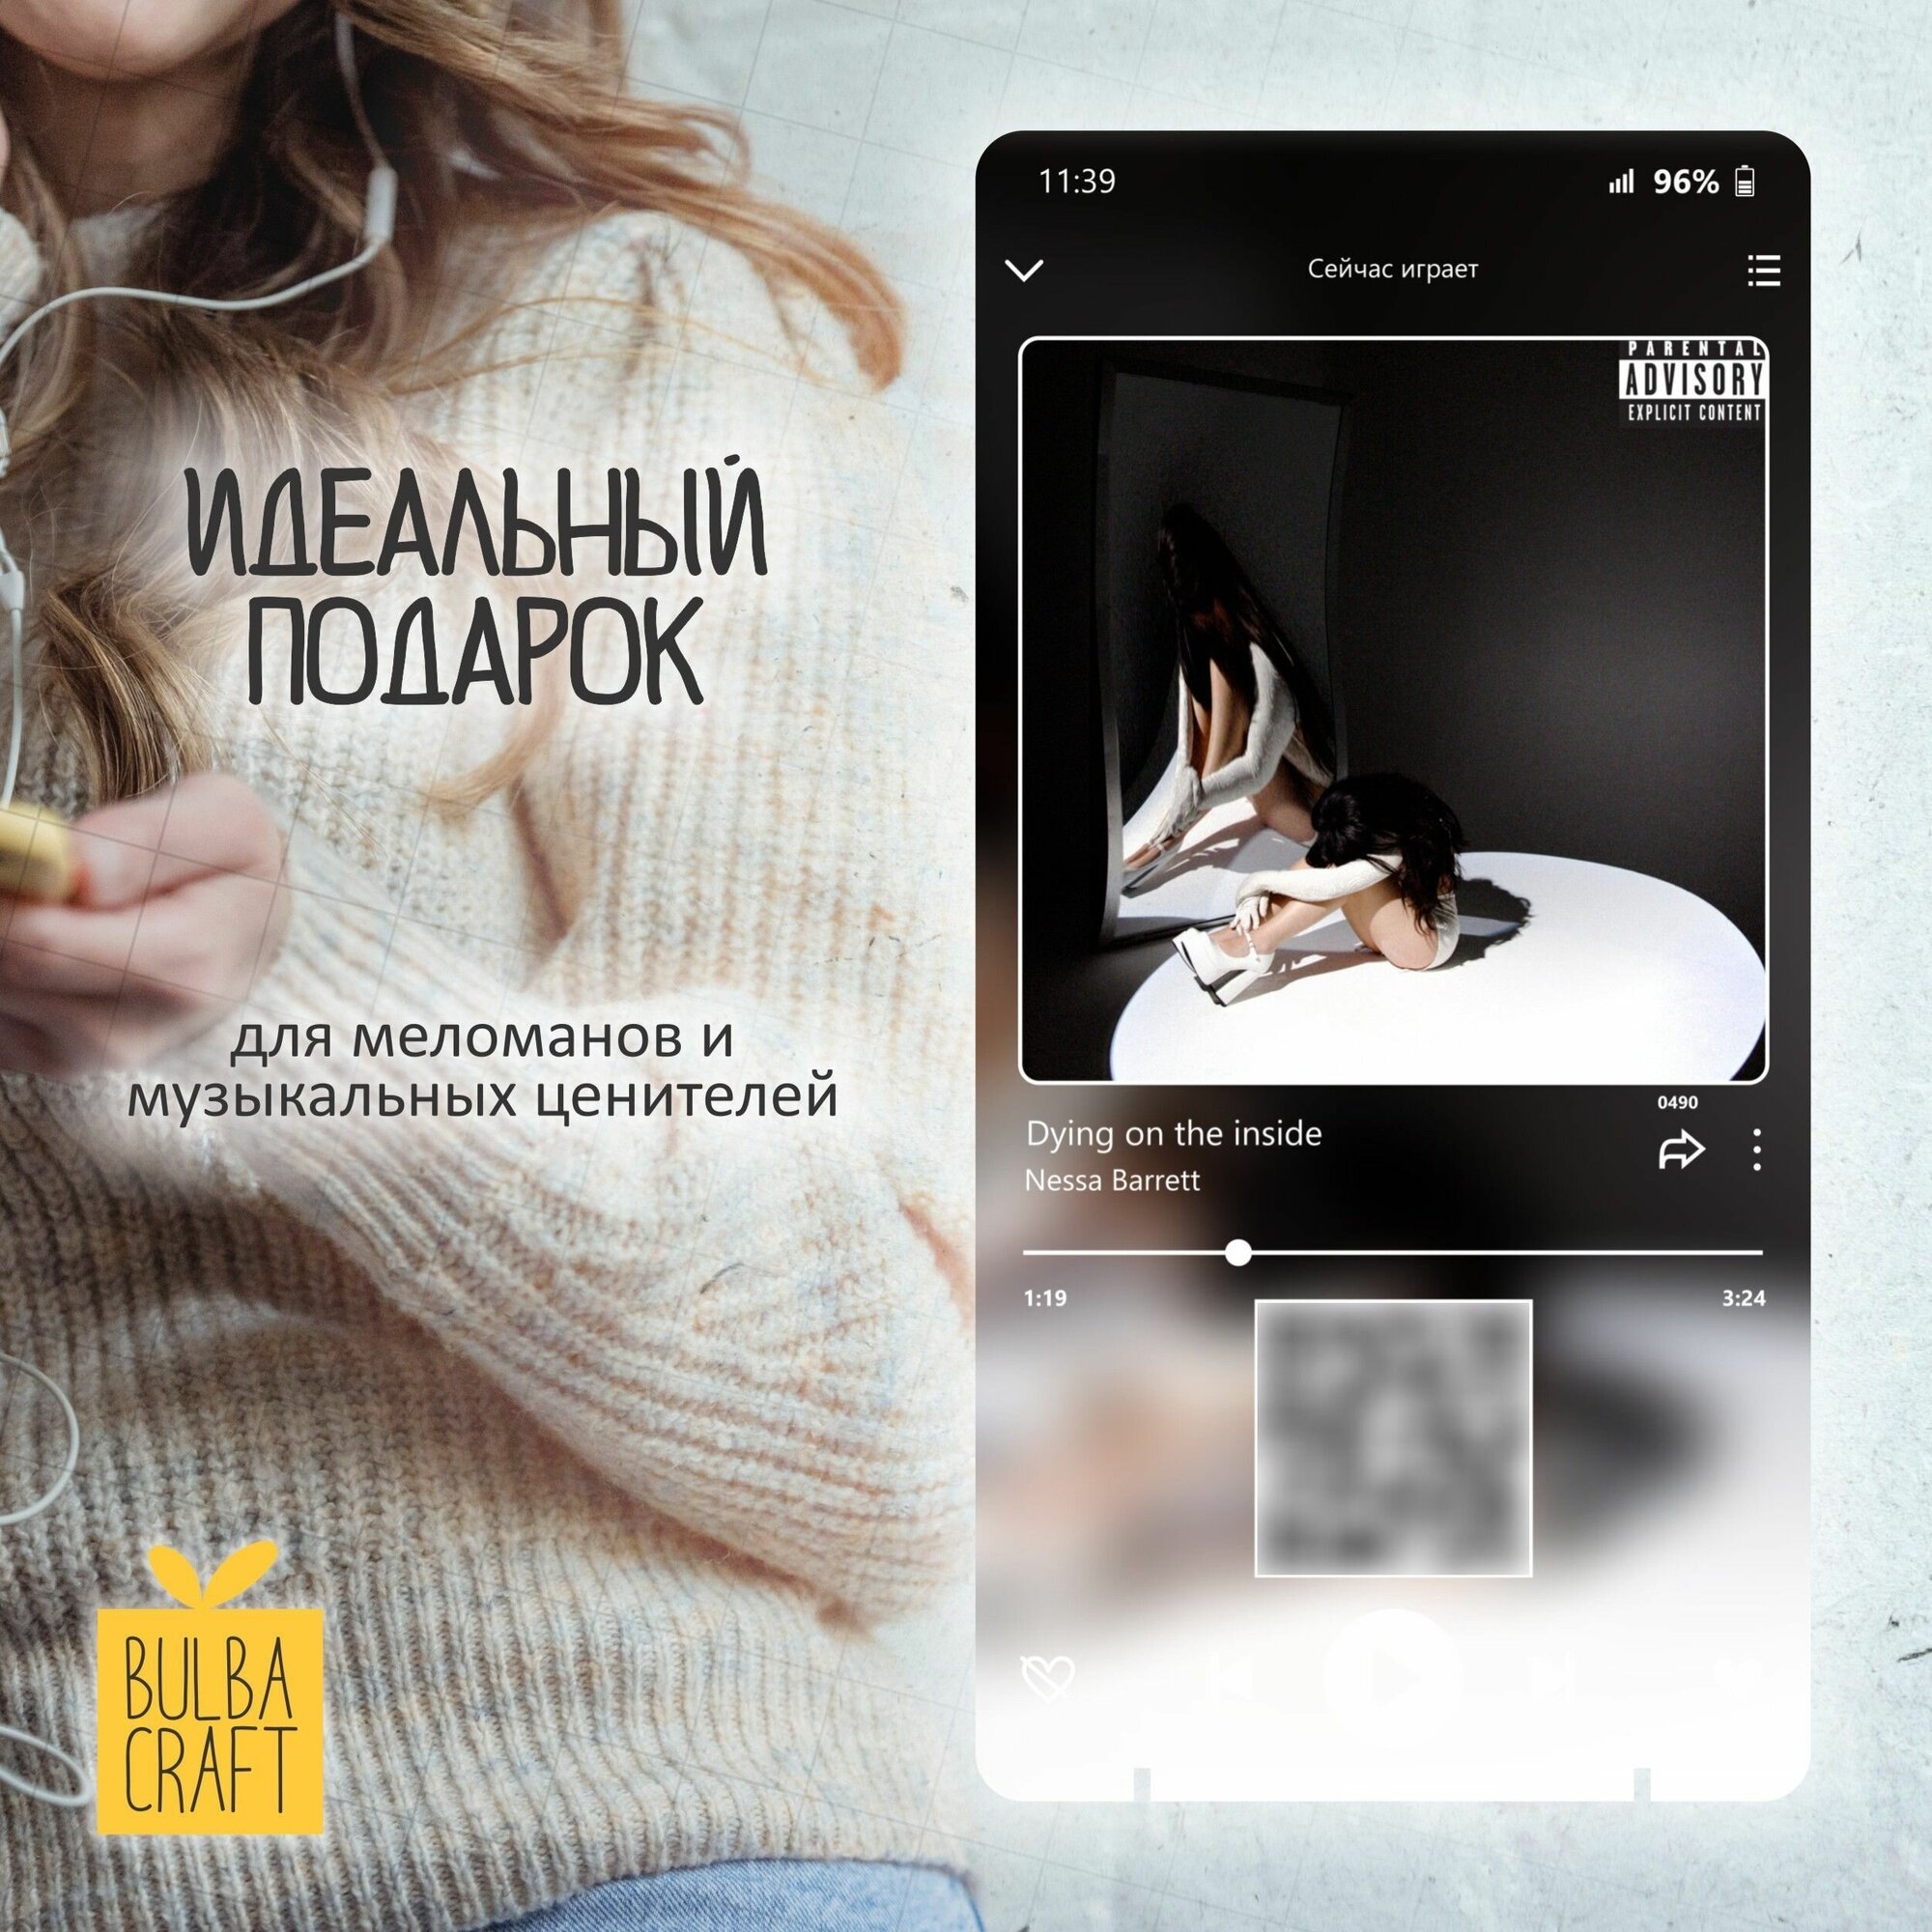 "Nessa Barrett - Dying on the inside" Spotify постер, музыкальная рамка, плакат, пластинка подарок Bulbacraft (10х20см)